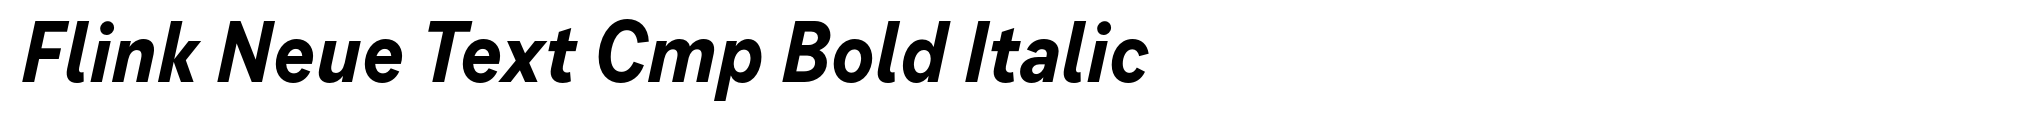 Flink Neue Text Cmp Bold Italic image